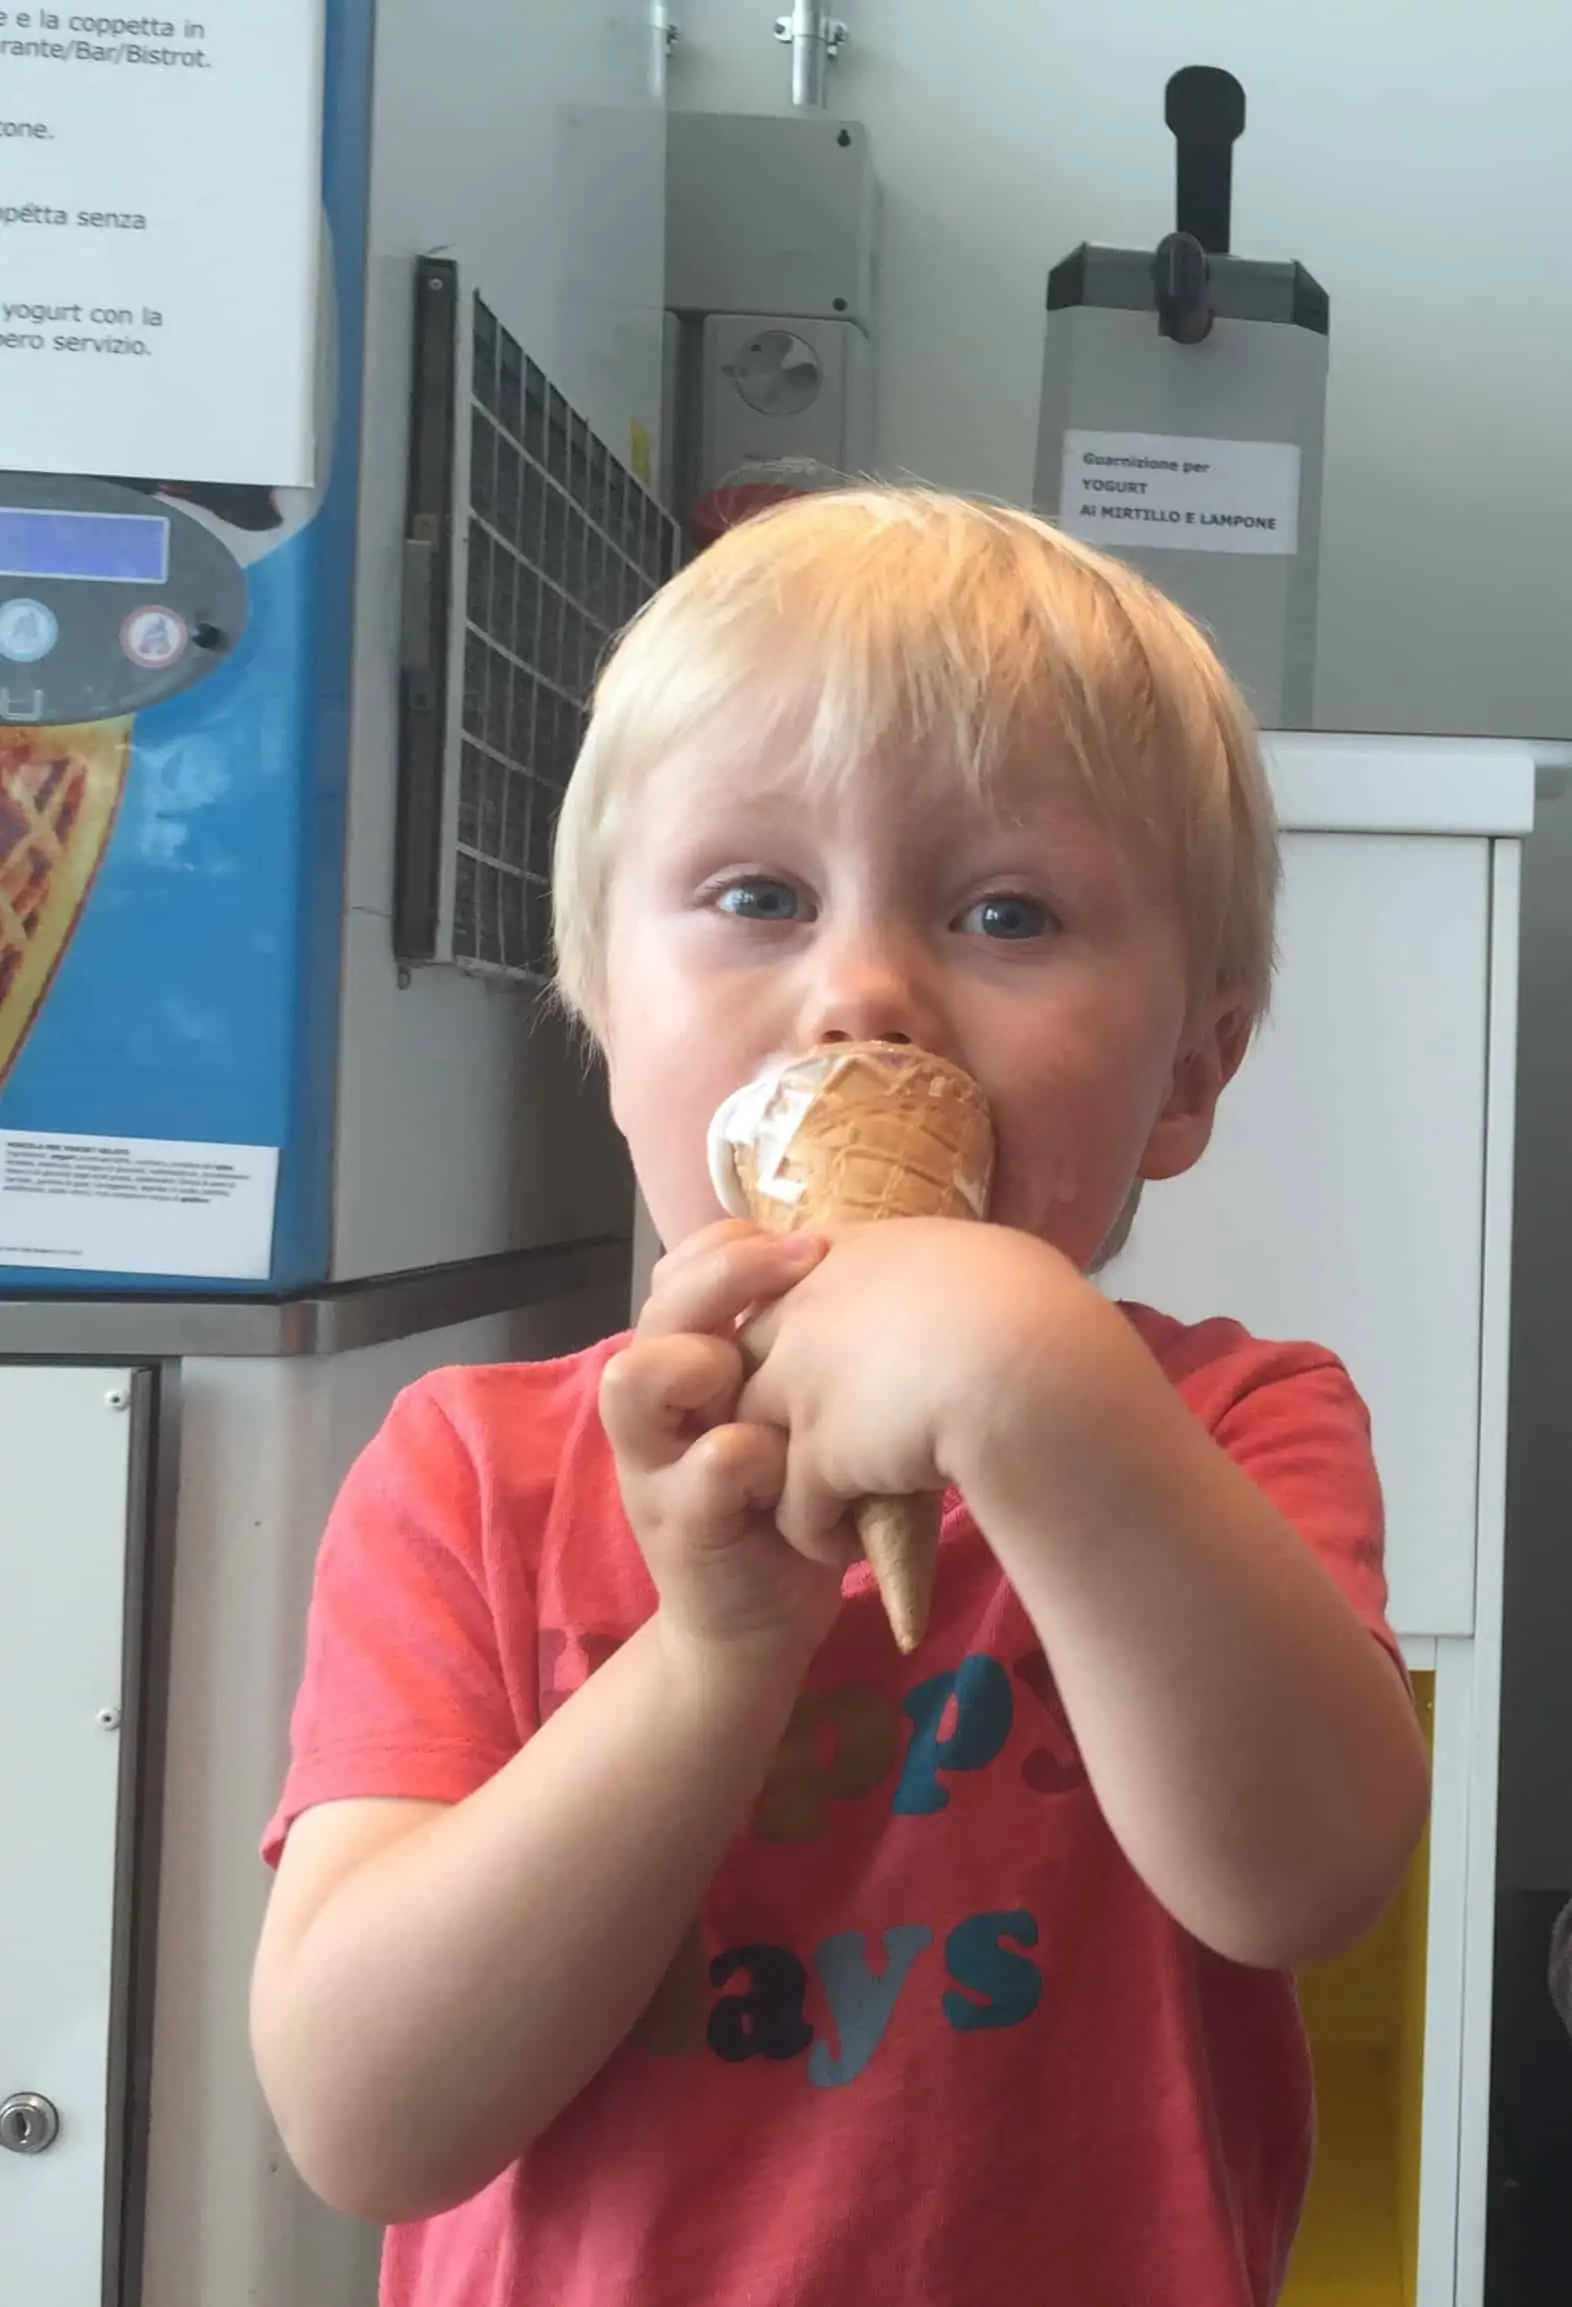 Little boy eating ice cream cone